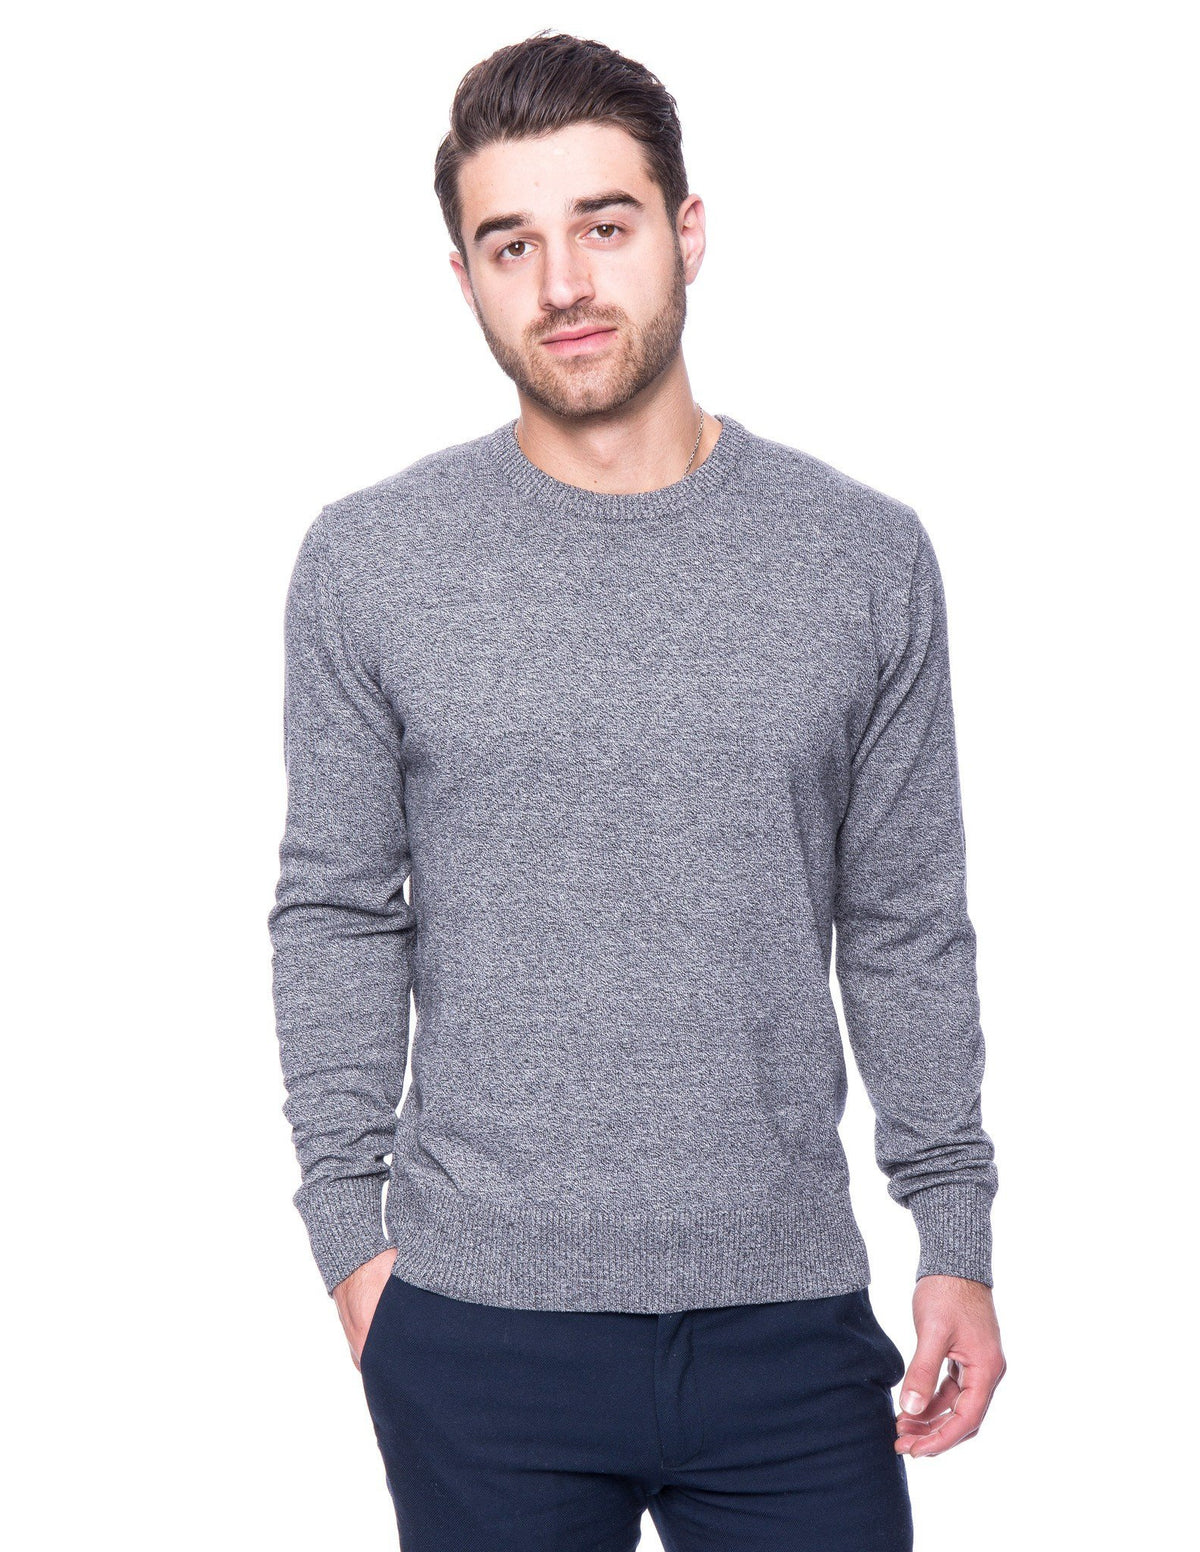 Men's Premium 100% Cotton Crew Neck Sweater - Marl Black/White